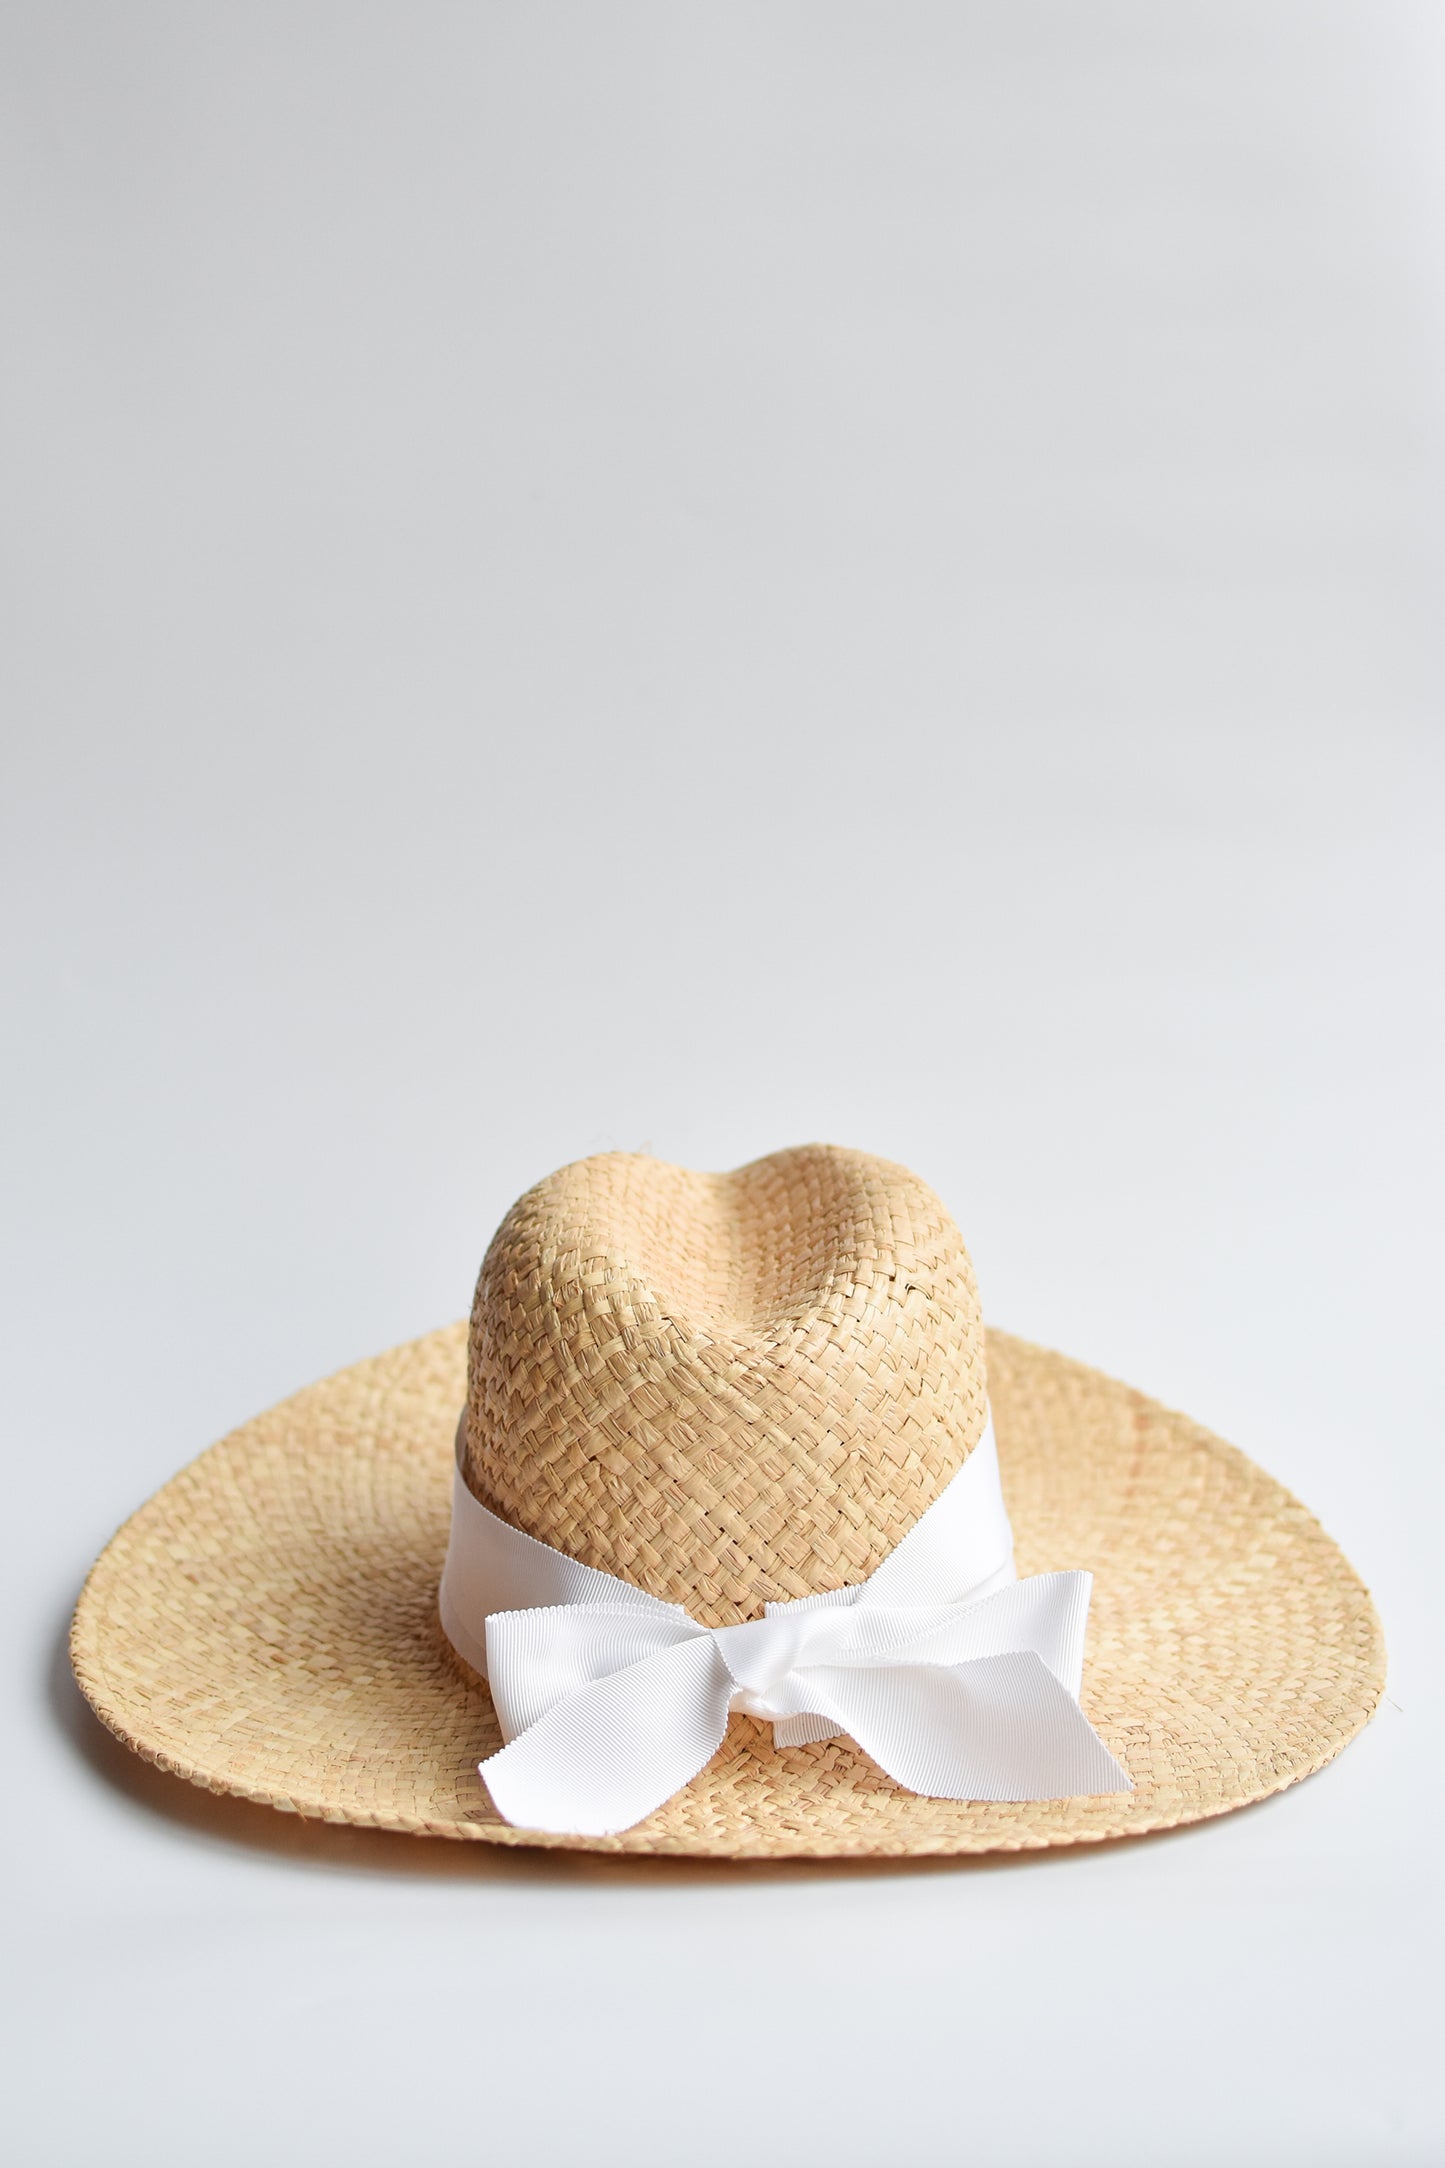 Natural raffia straw panama hat with white grosgrain tie.